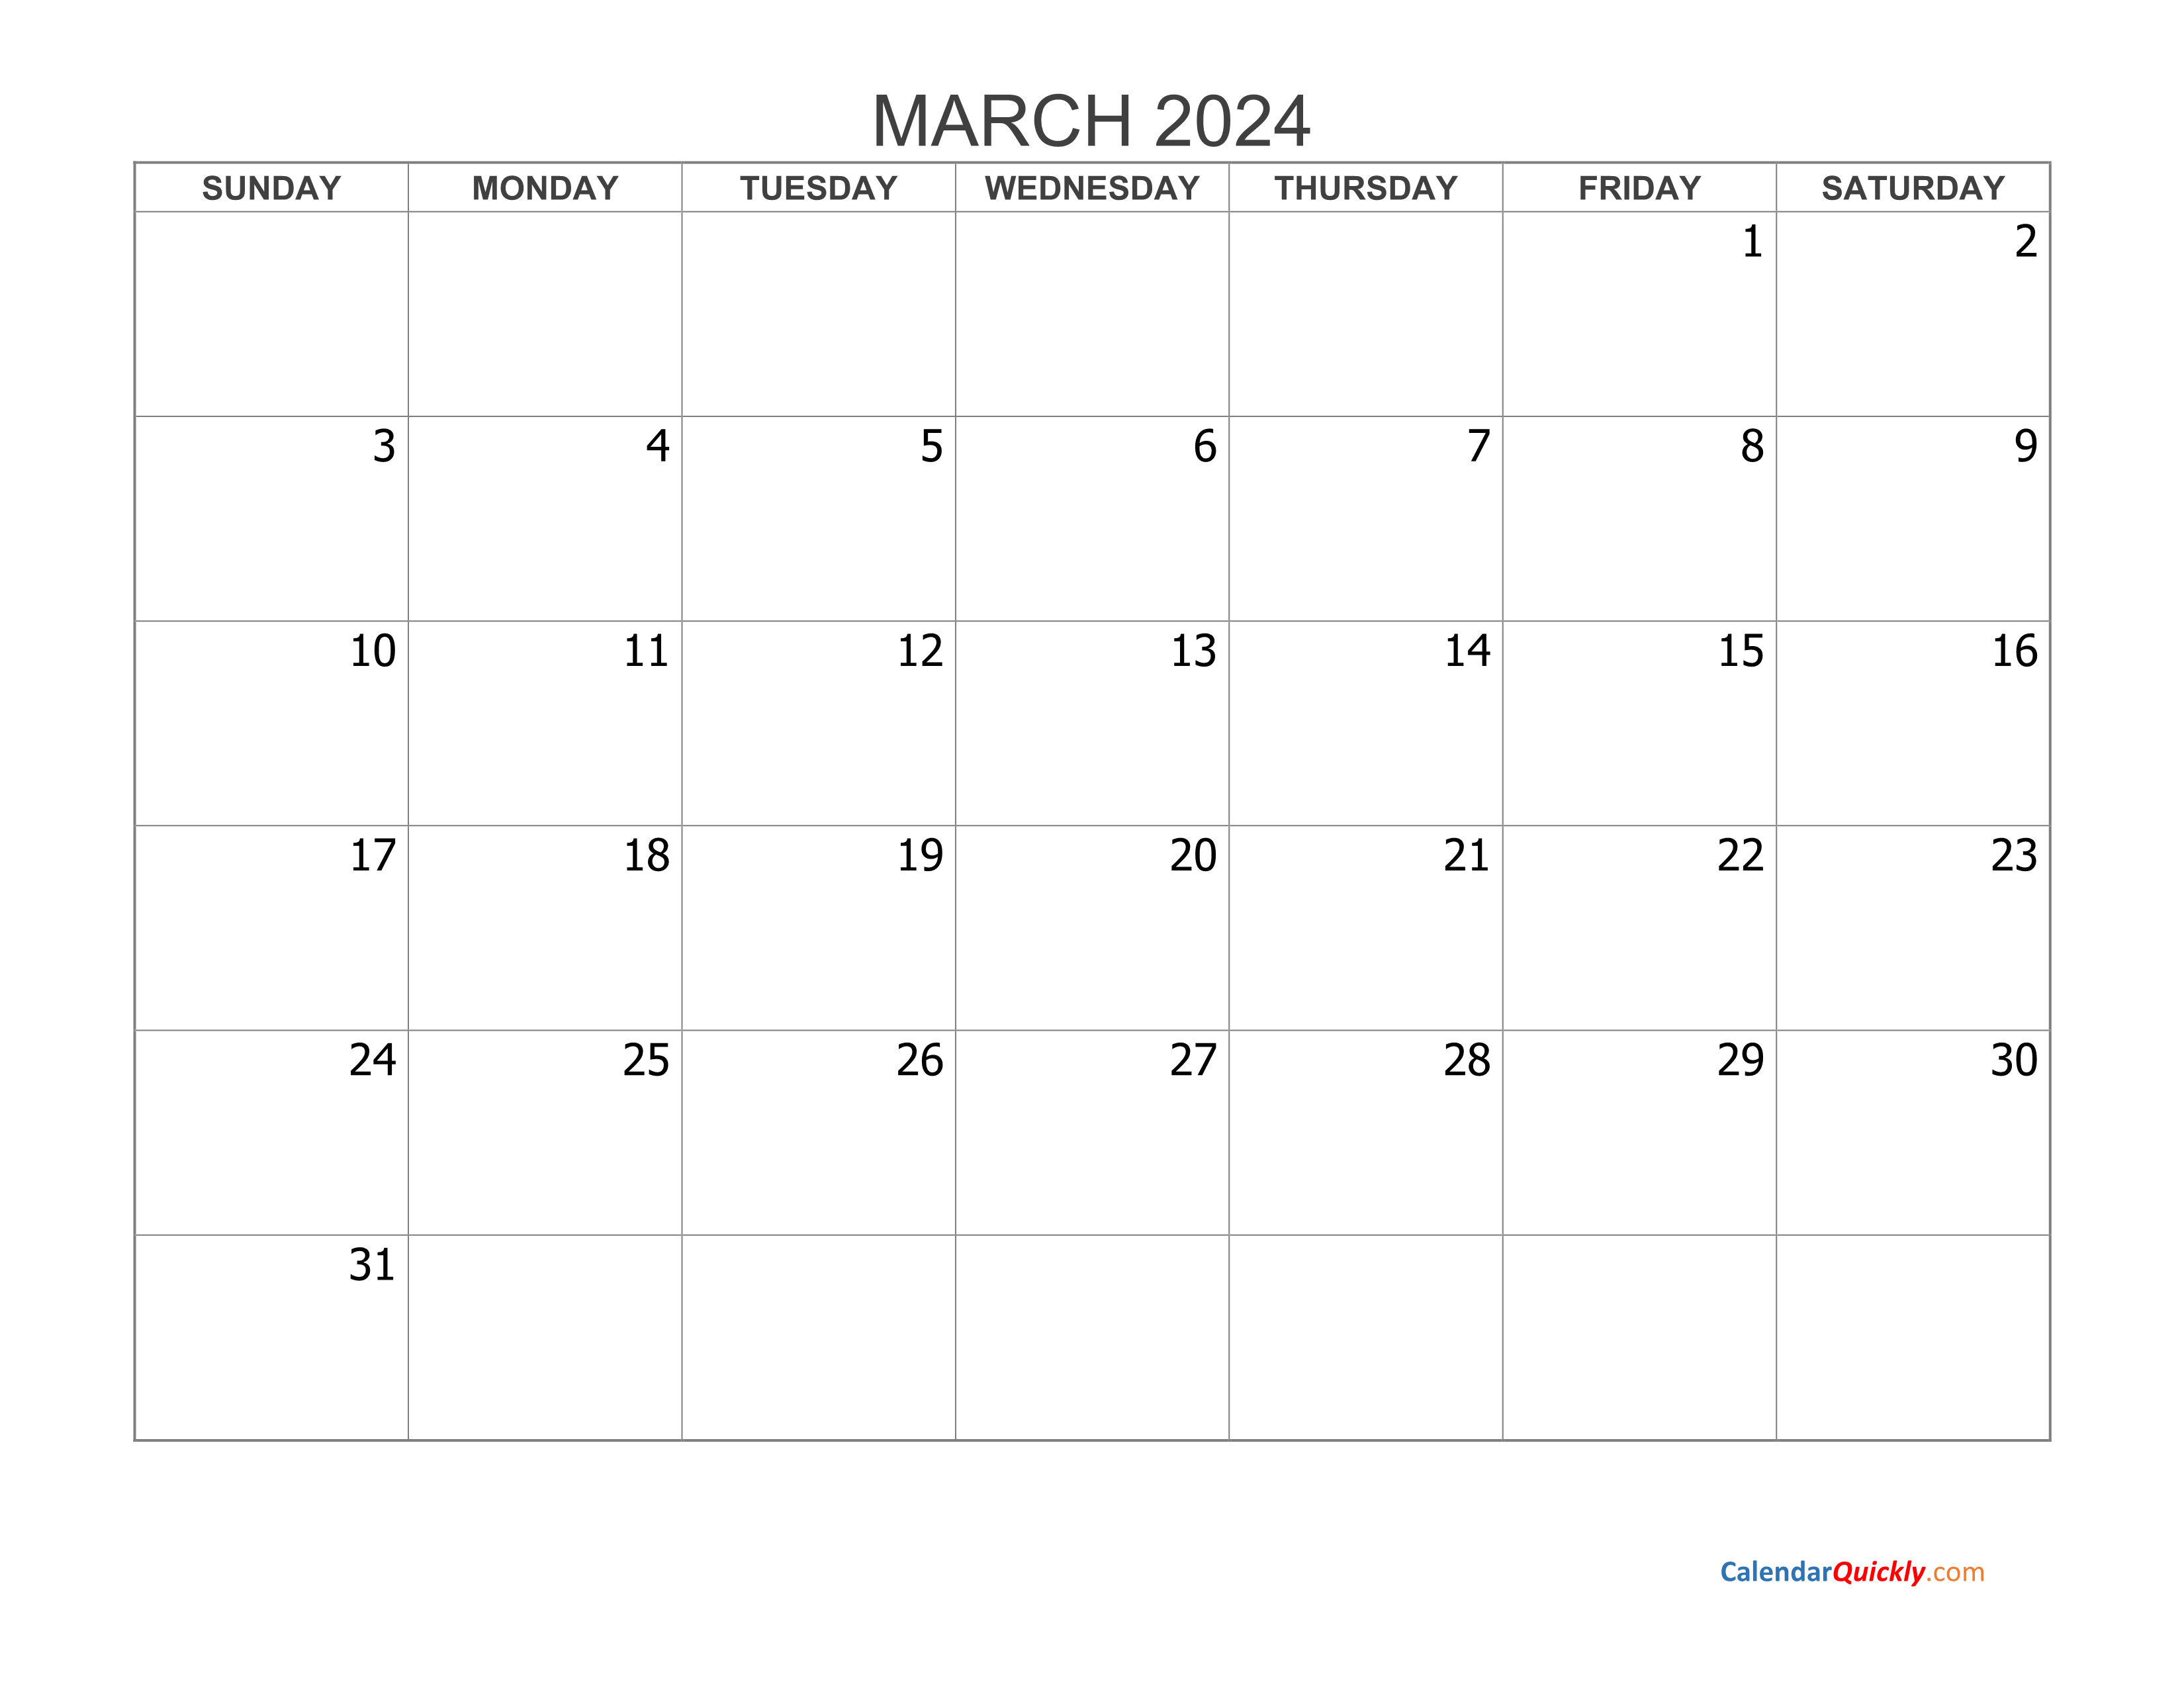 March 2024 Blank Calendar Calendar Quickly - Free Printable 2024 Monthly Calendar March